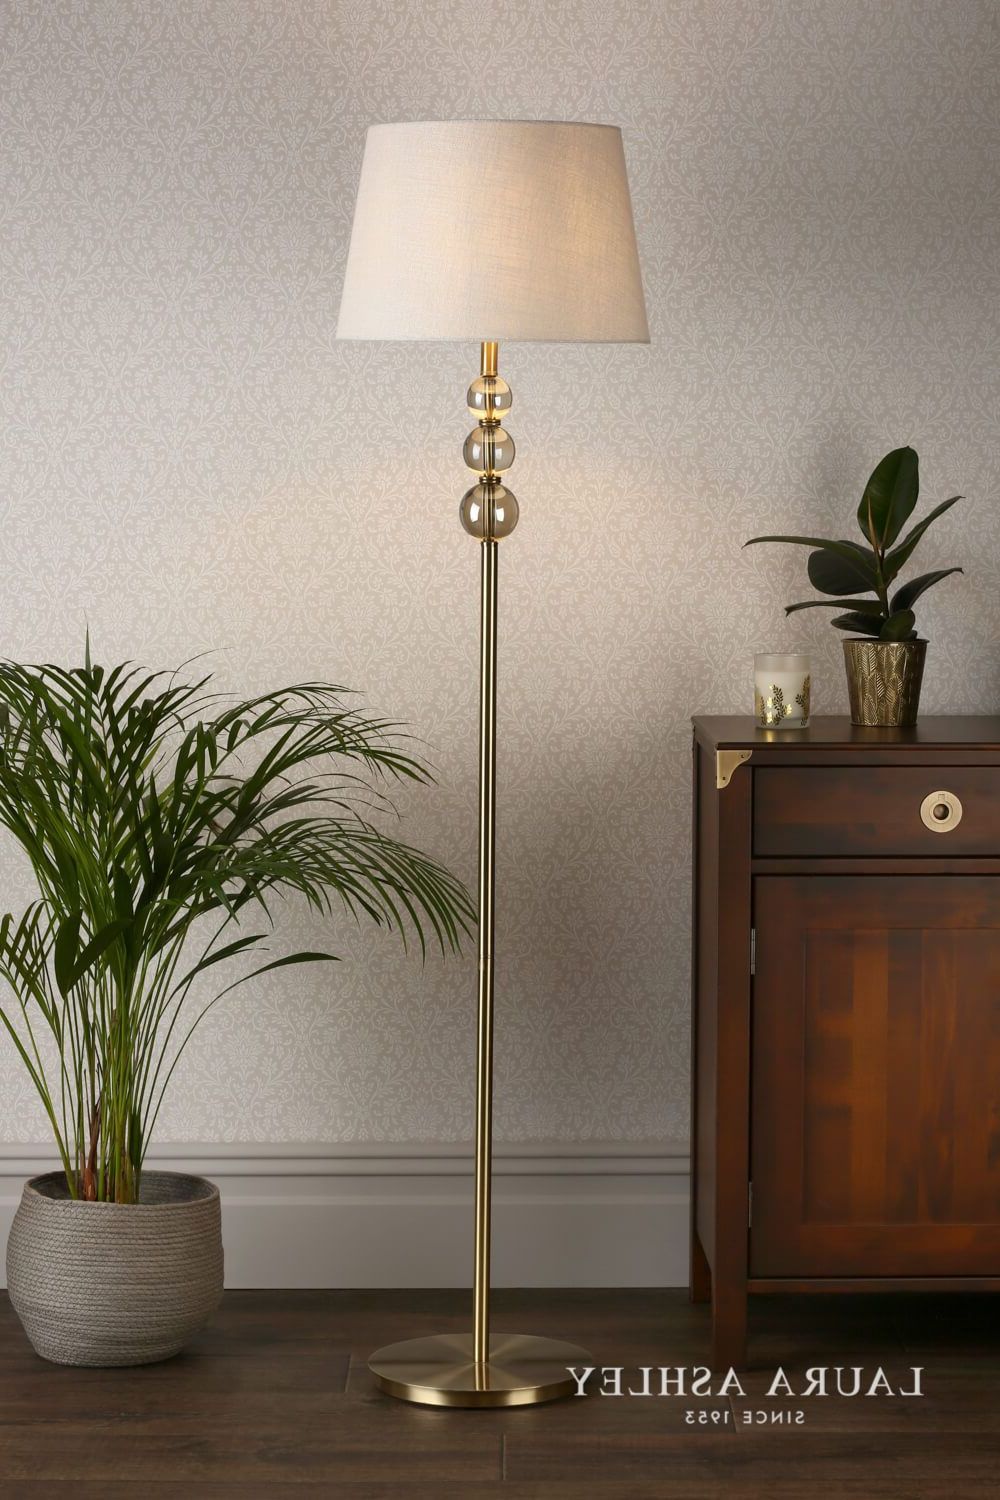 Selby Antique Brass Floor Lamp Base Only | Jrlighting.co.uk Intended For Brass Floor Lamps (Gallery 20 of 20)